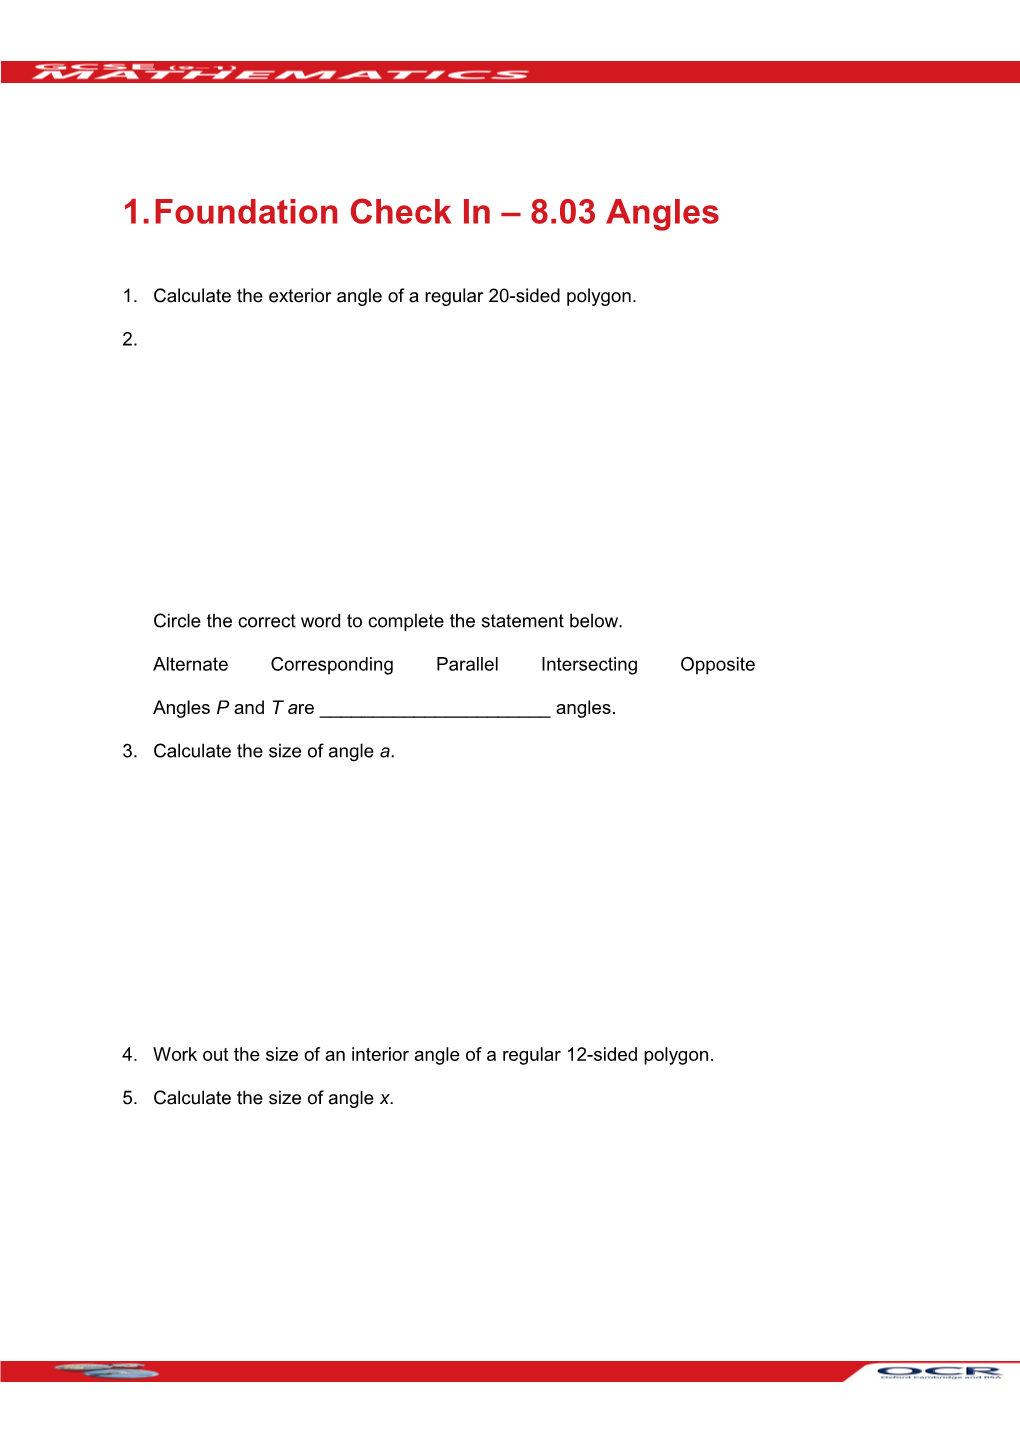 GCSE (9-1) Mathematics Foundation Check in 8.03 Angles